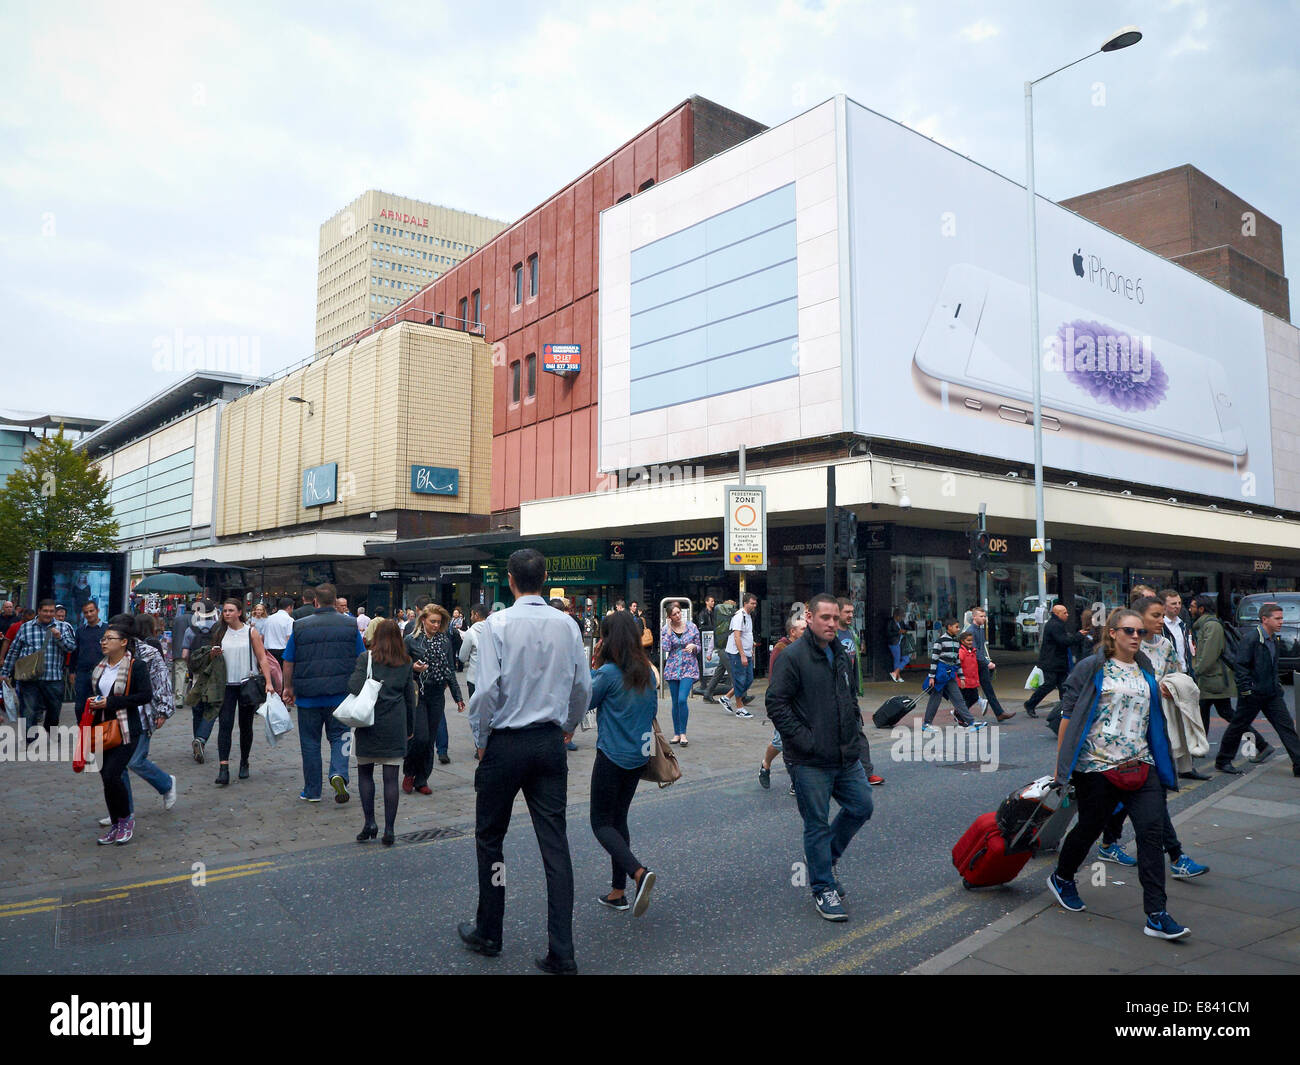 Apple iPhone 6 billboard in Manchester UK Stock Photo